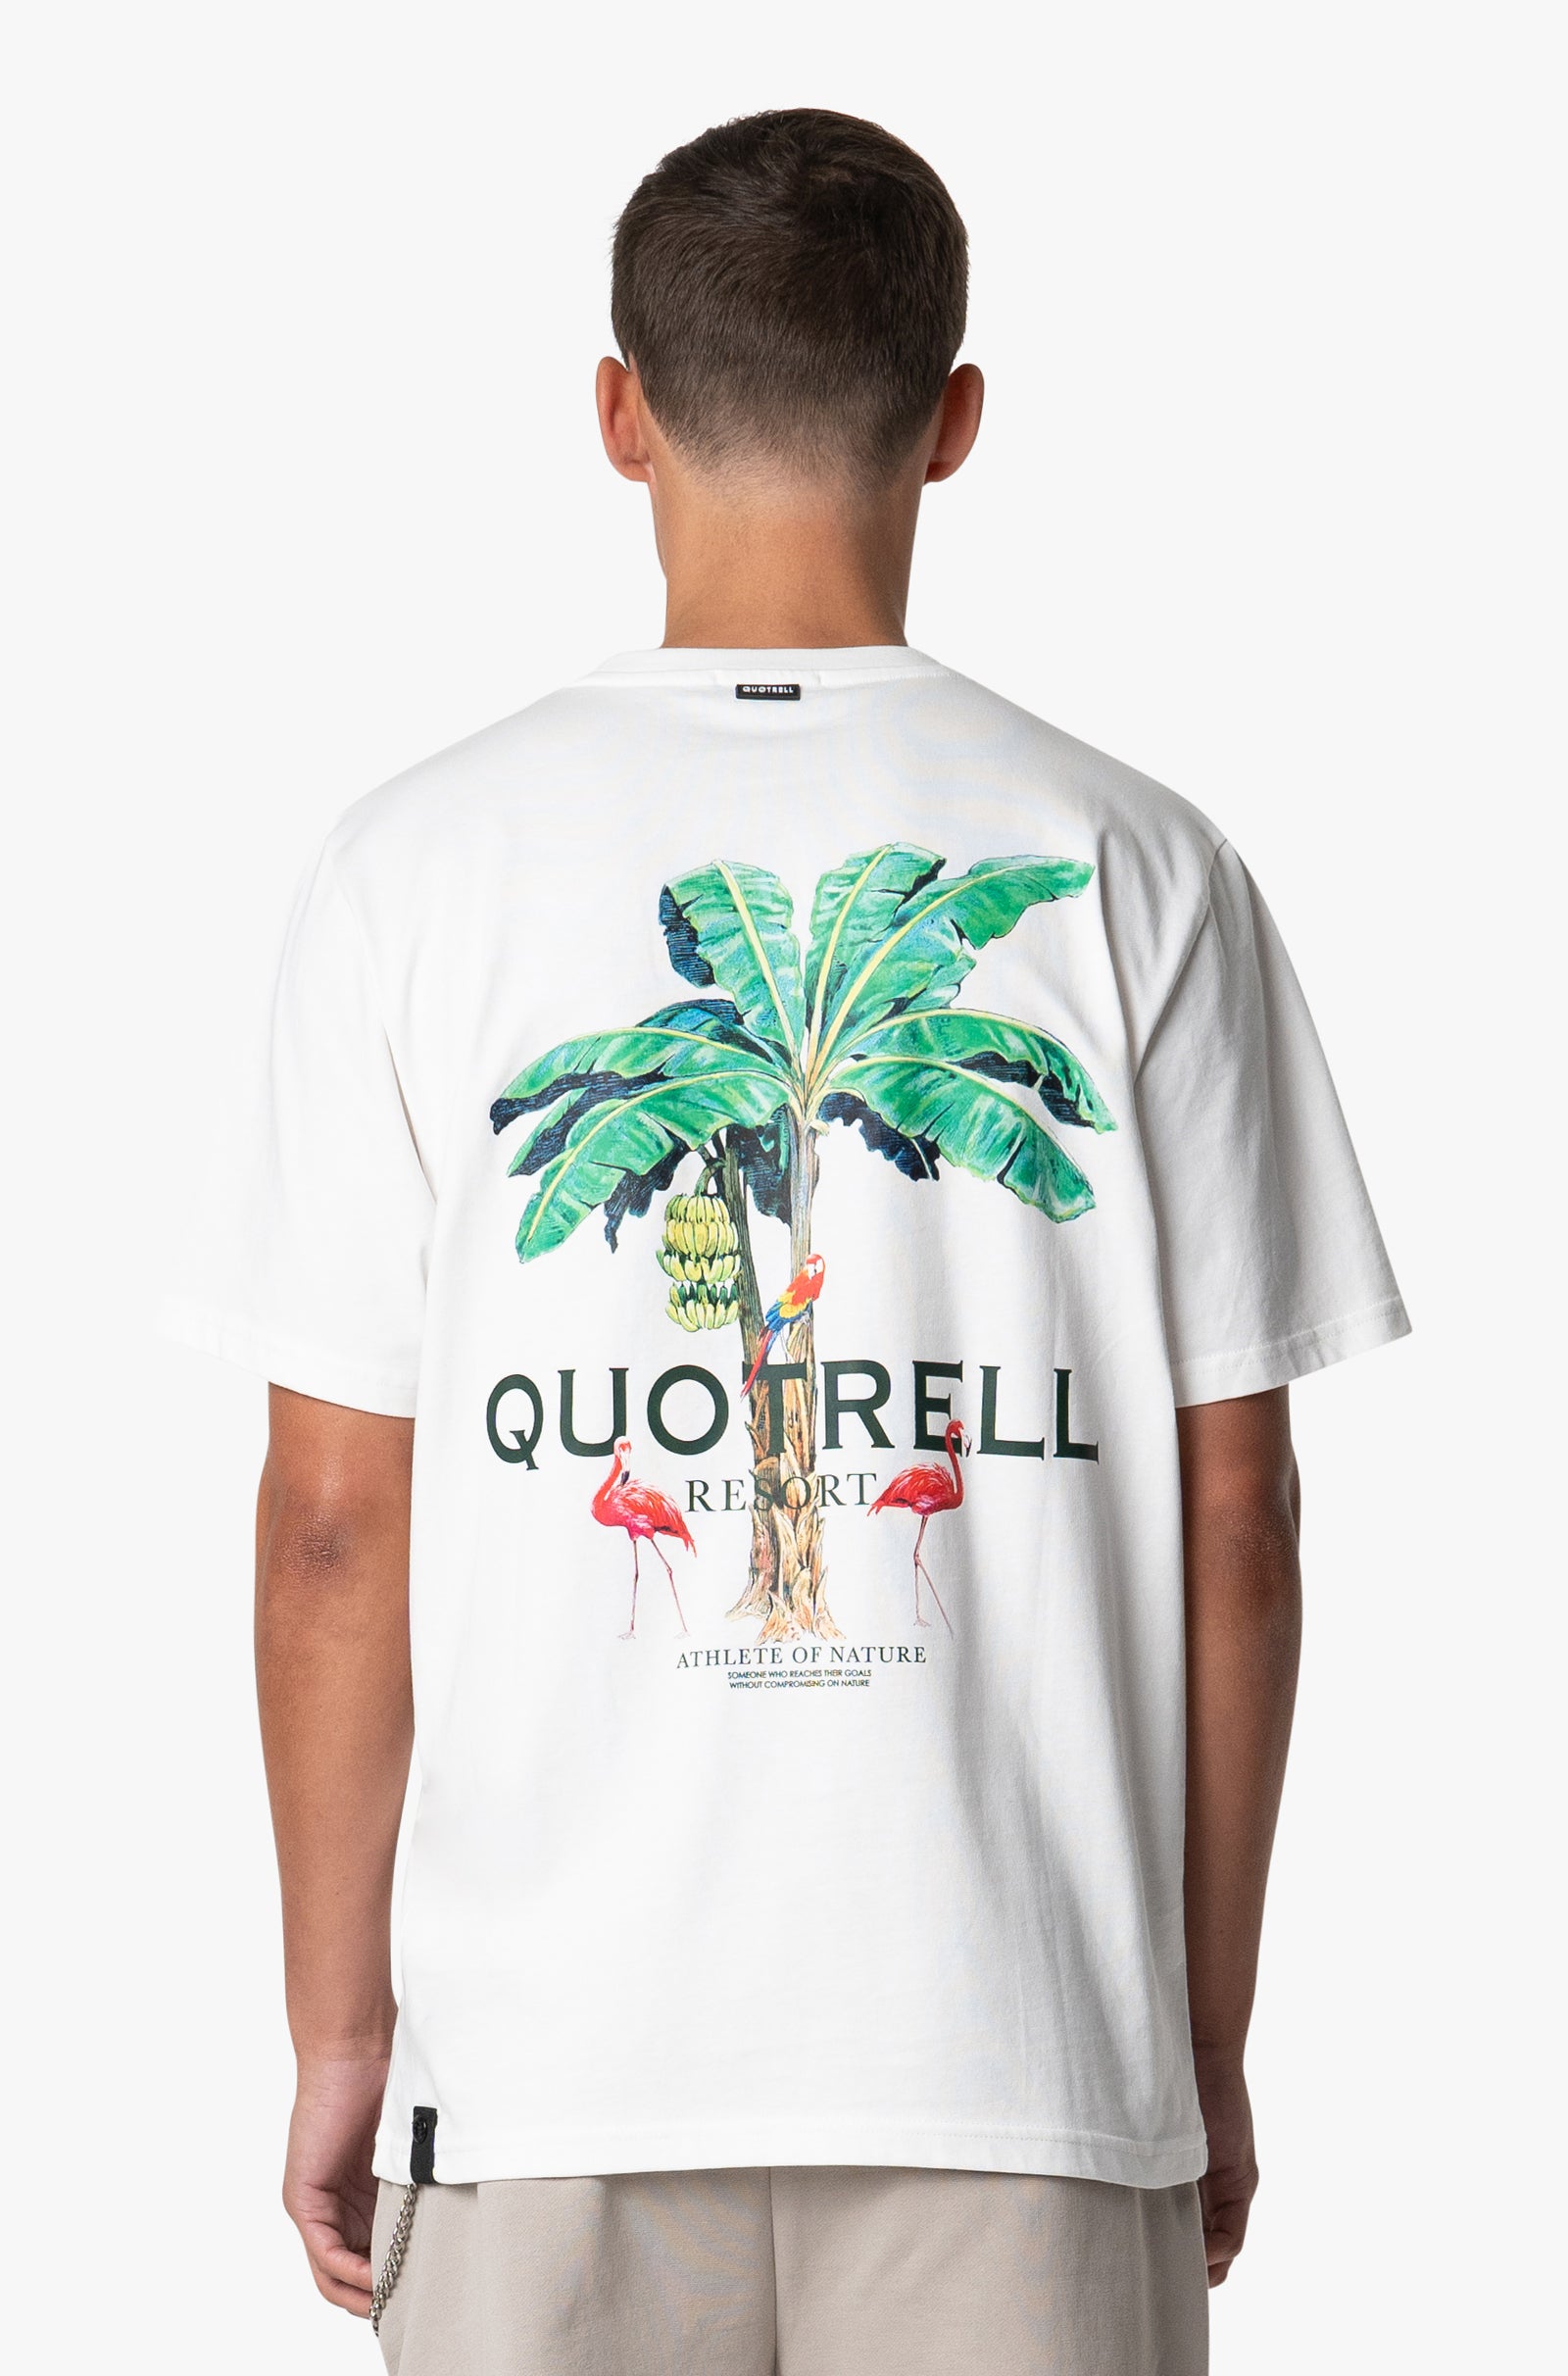 Quotrell Resort T-shirt